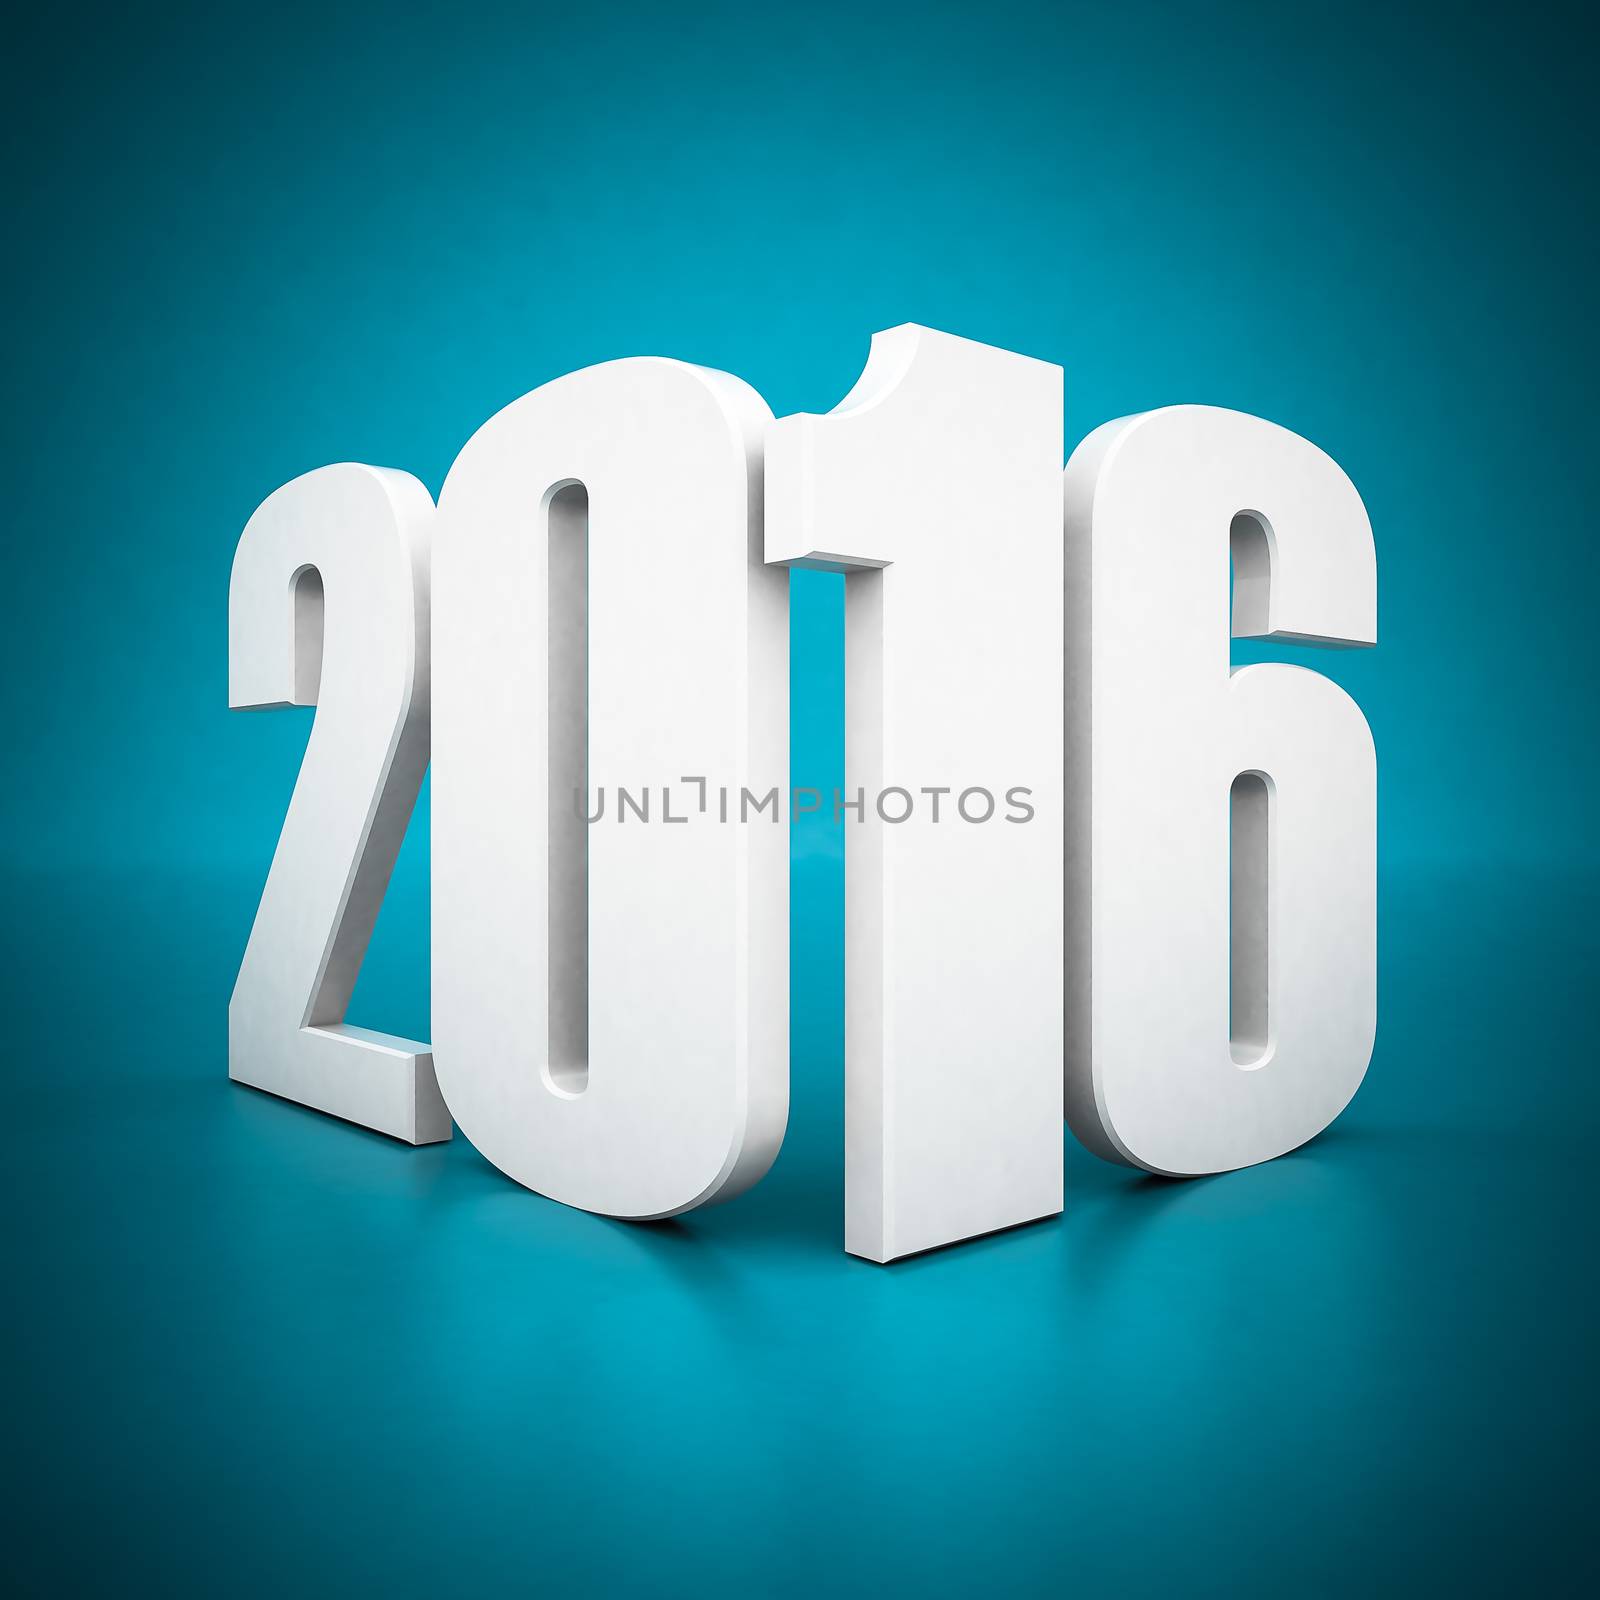 Happy new year 2016 by mrgarry